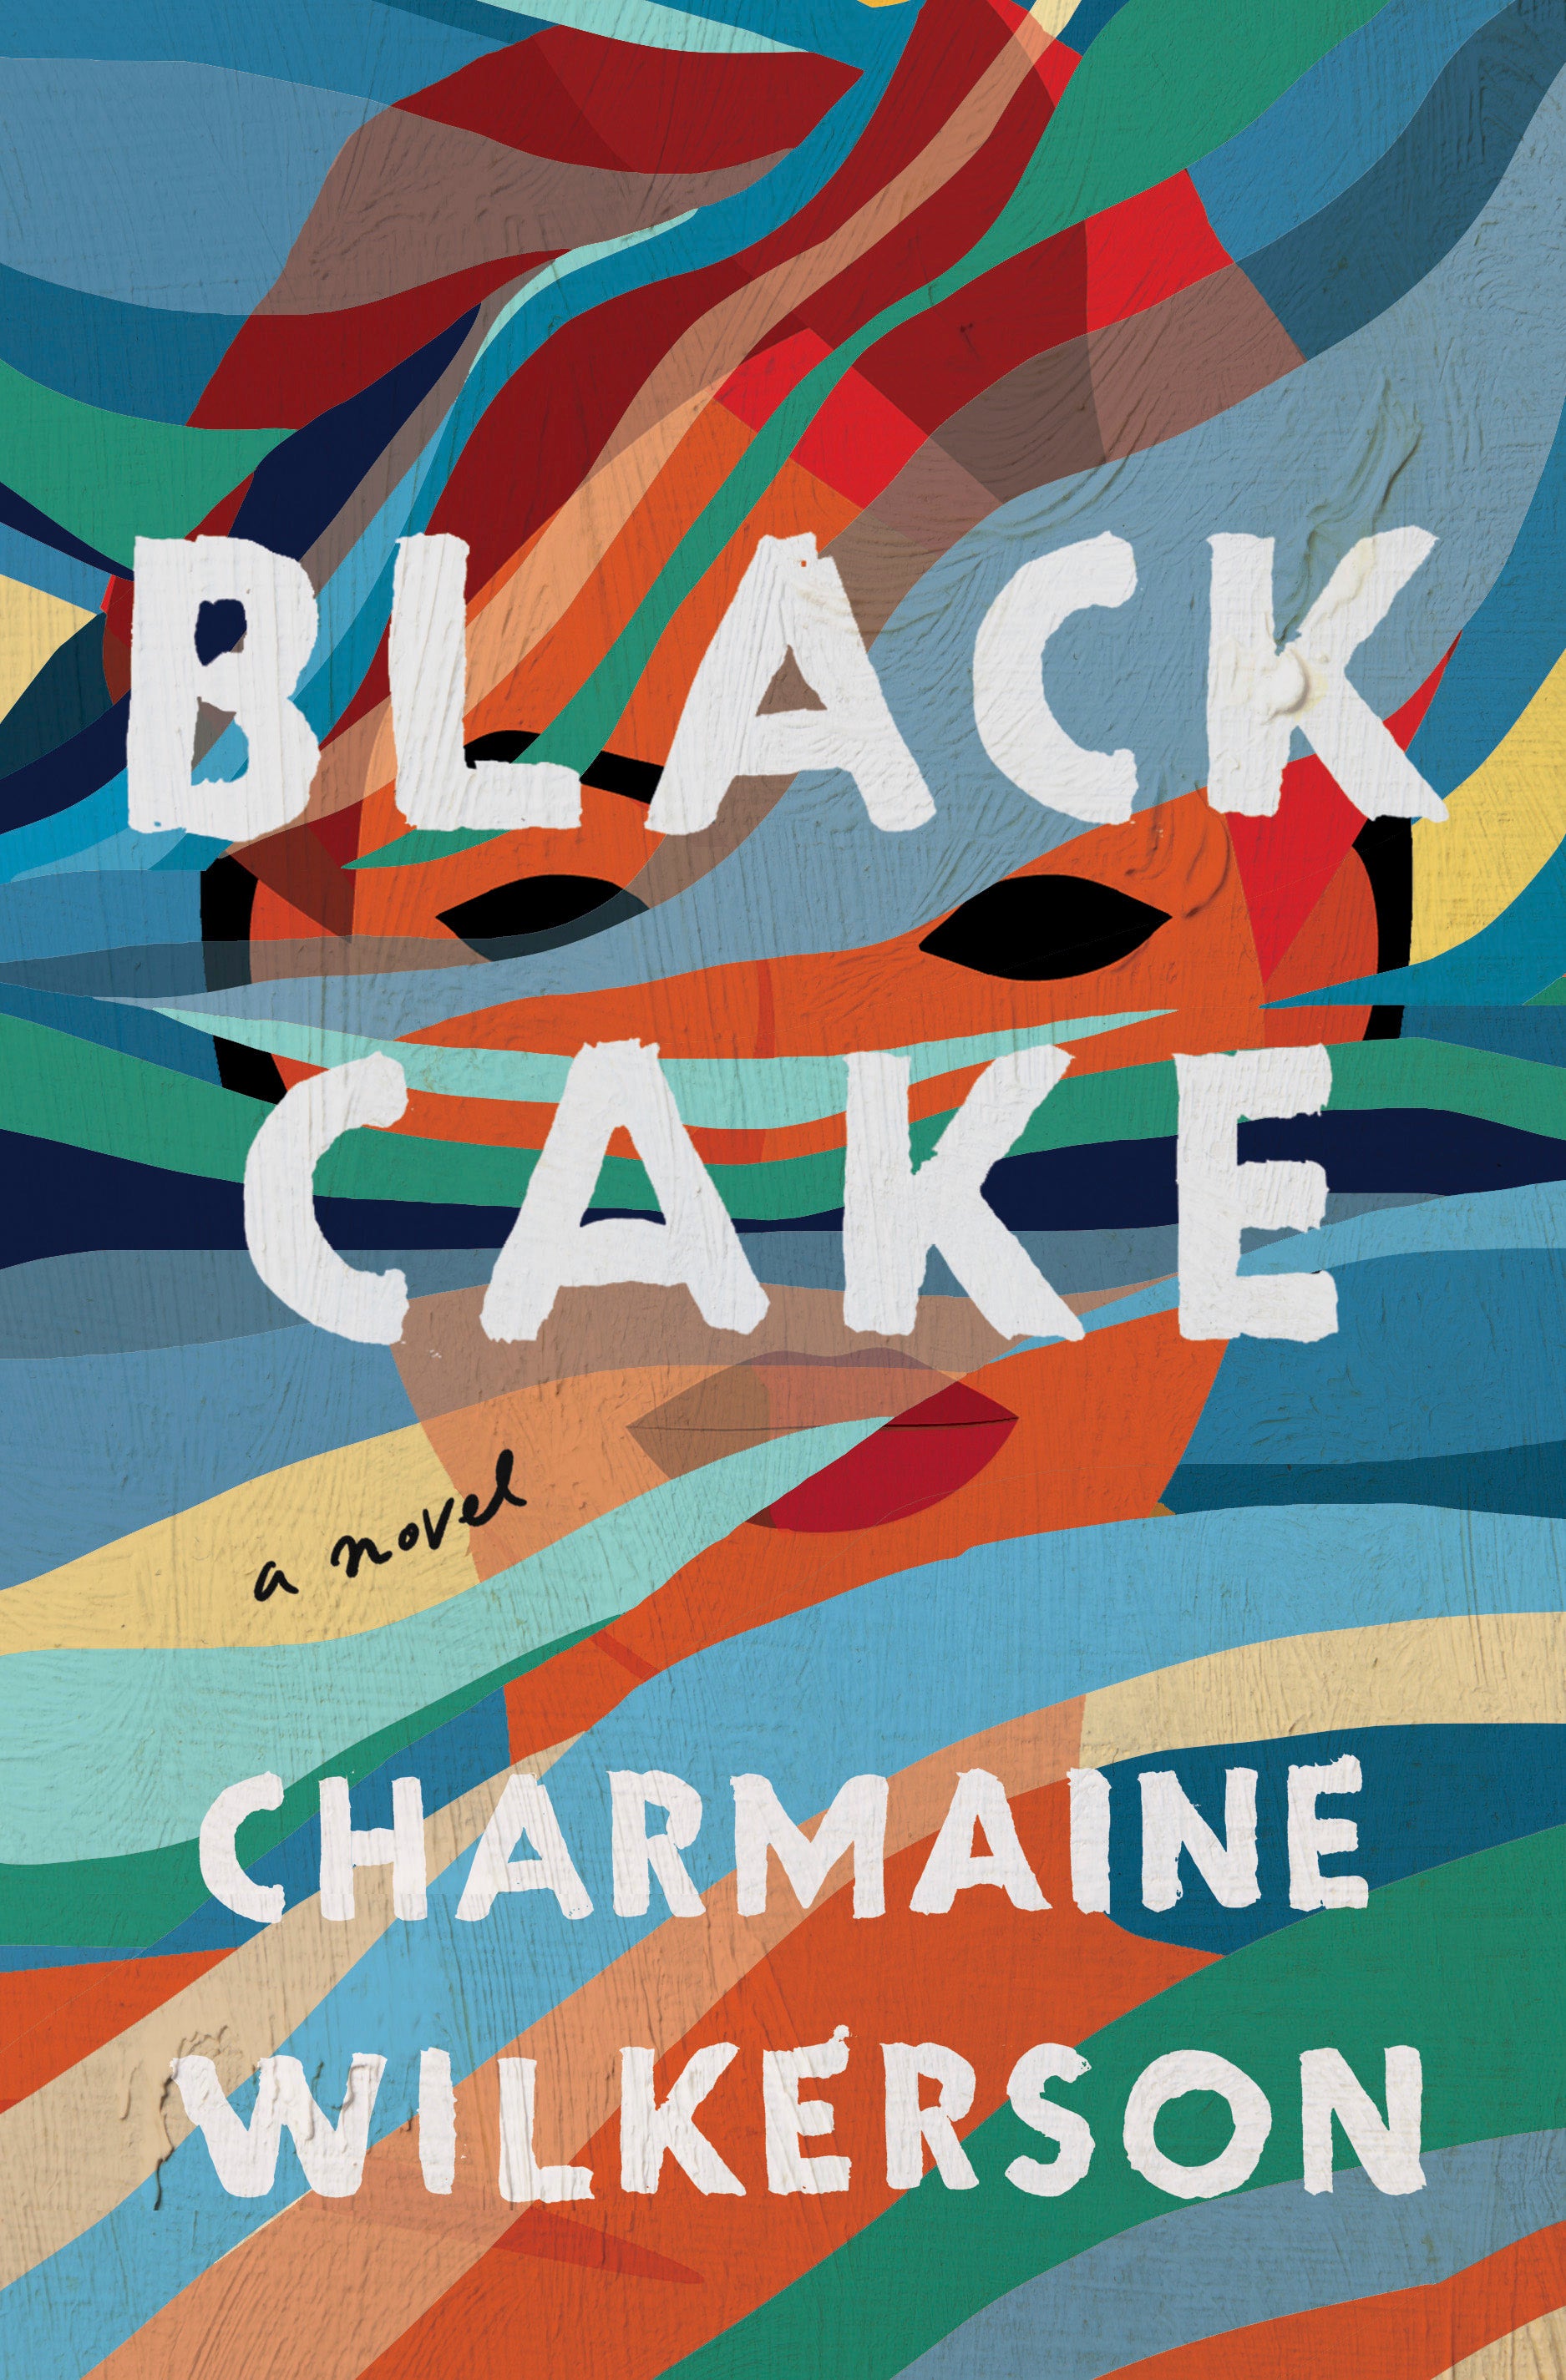 Book Review - Black Cake